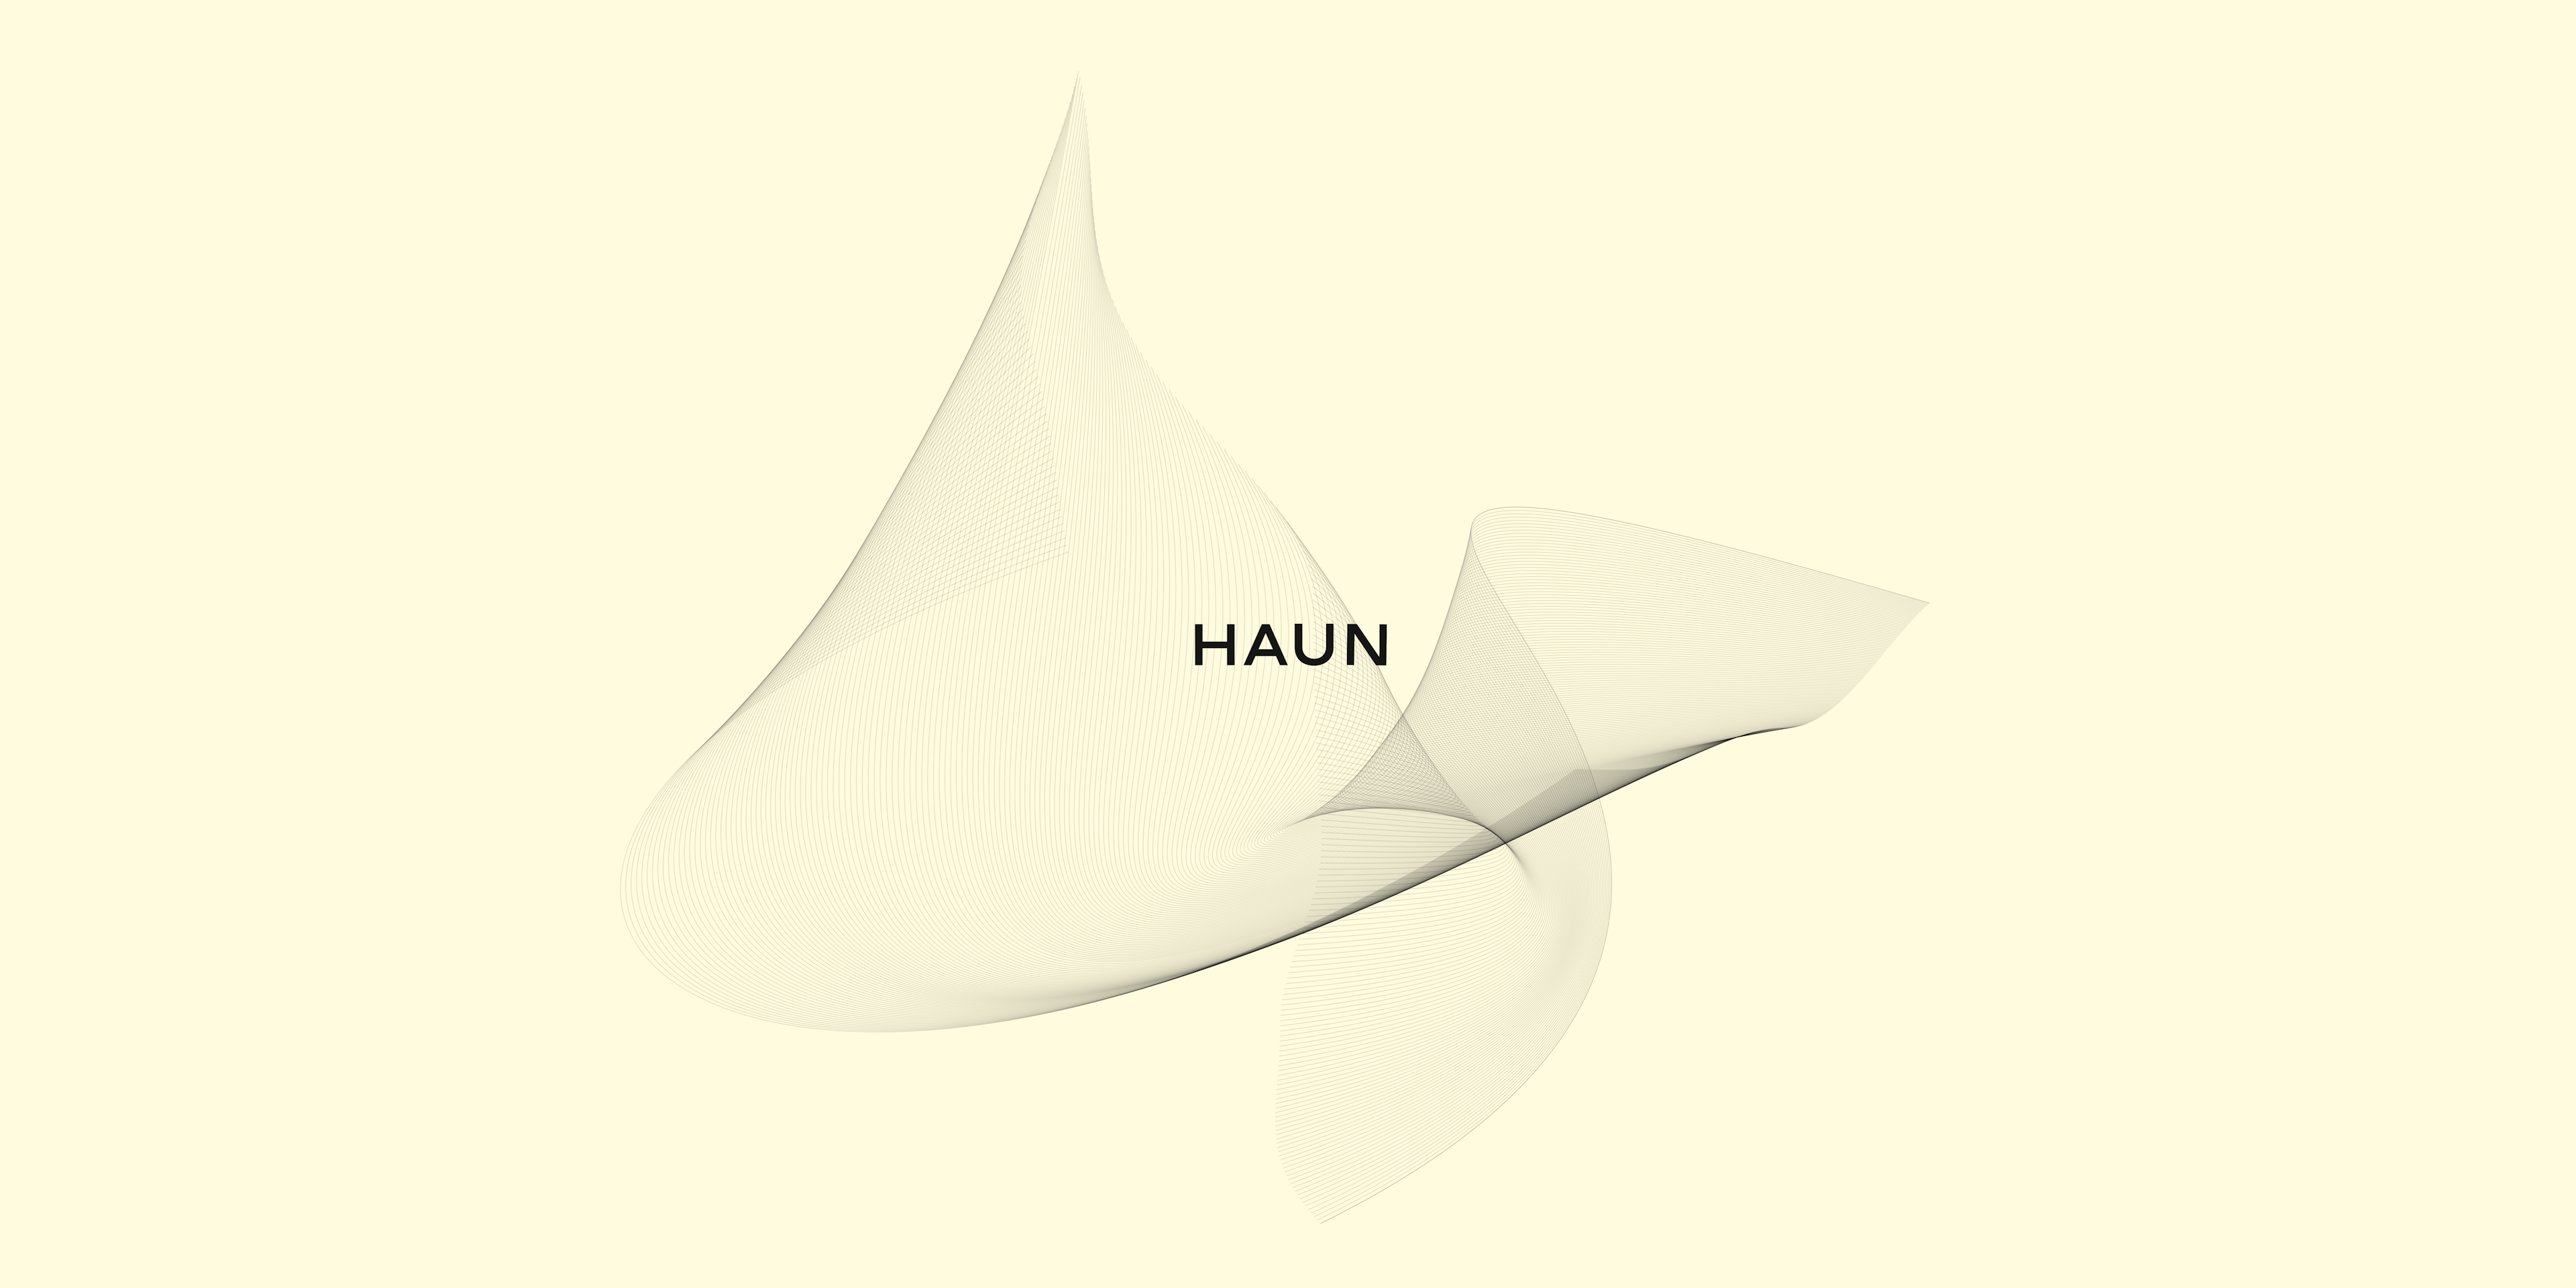 Introducing Haun Ventures